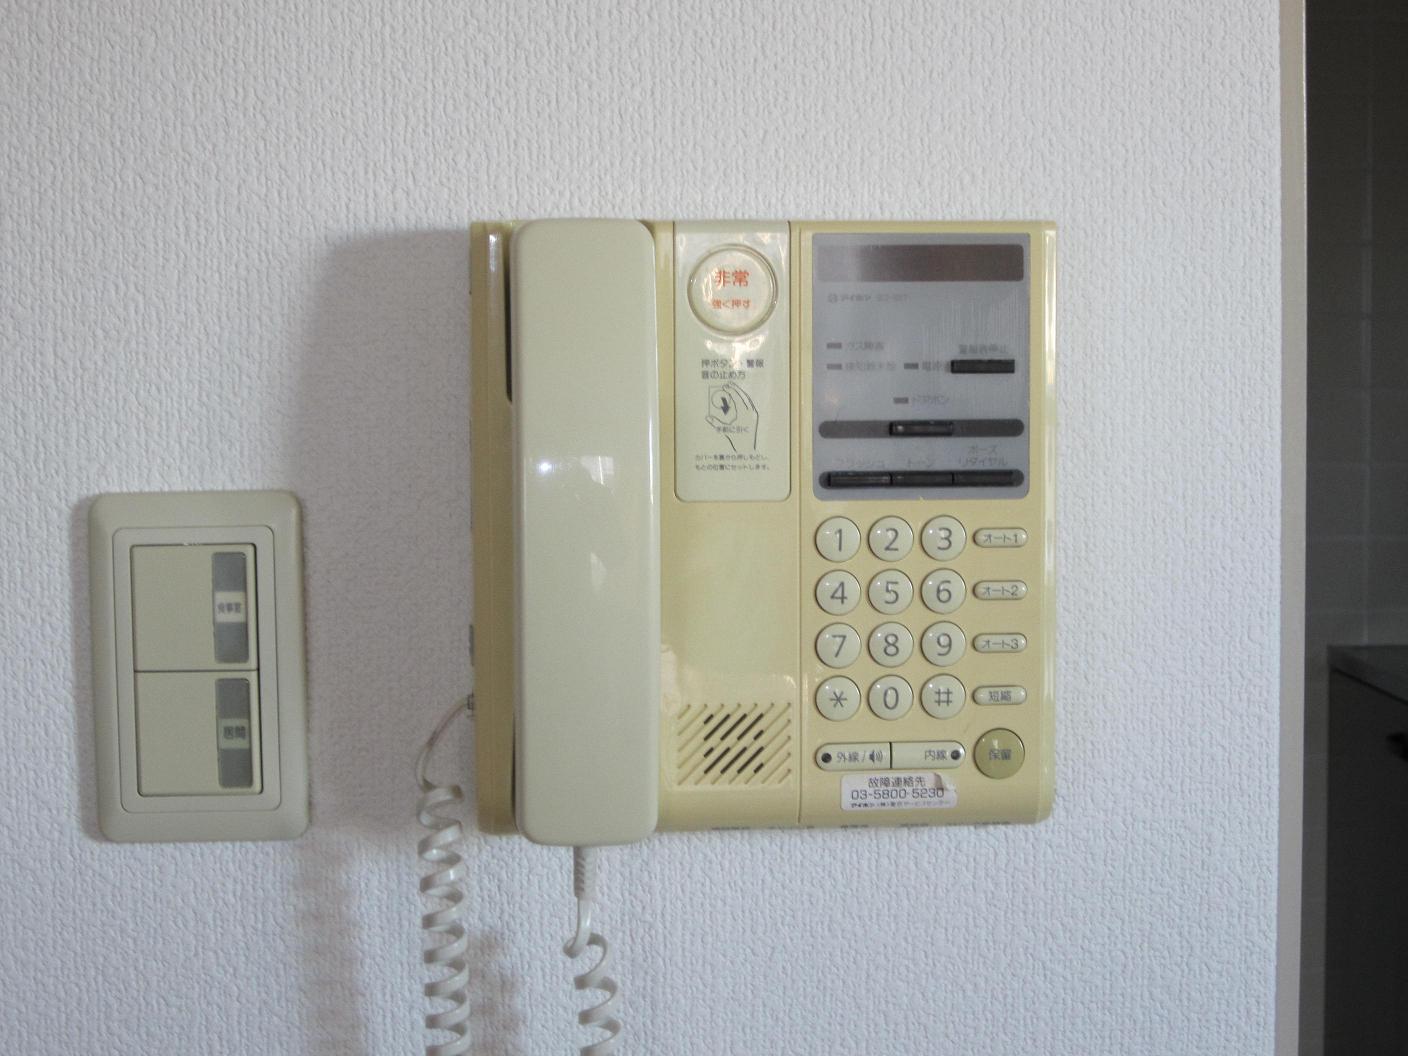 Other Equipment. Intercom phone